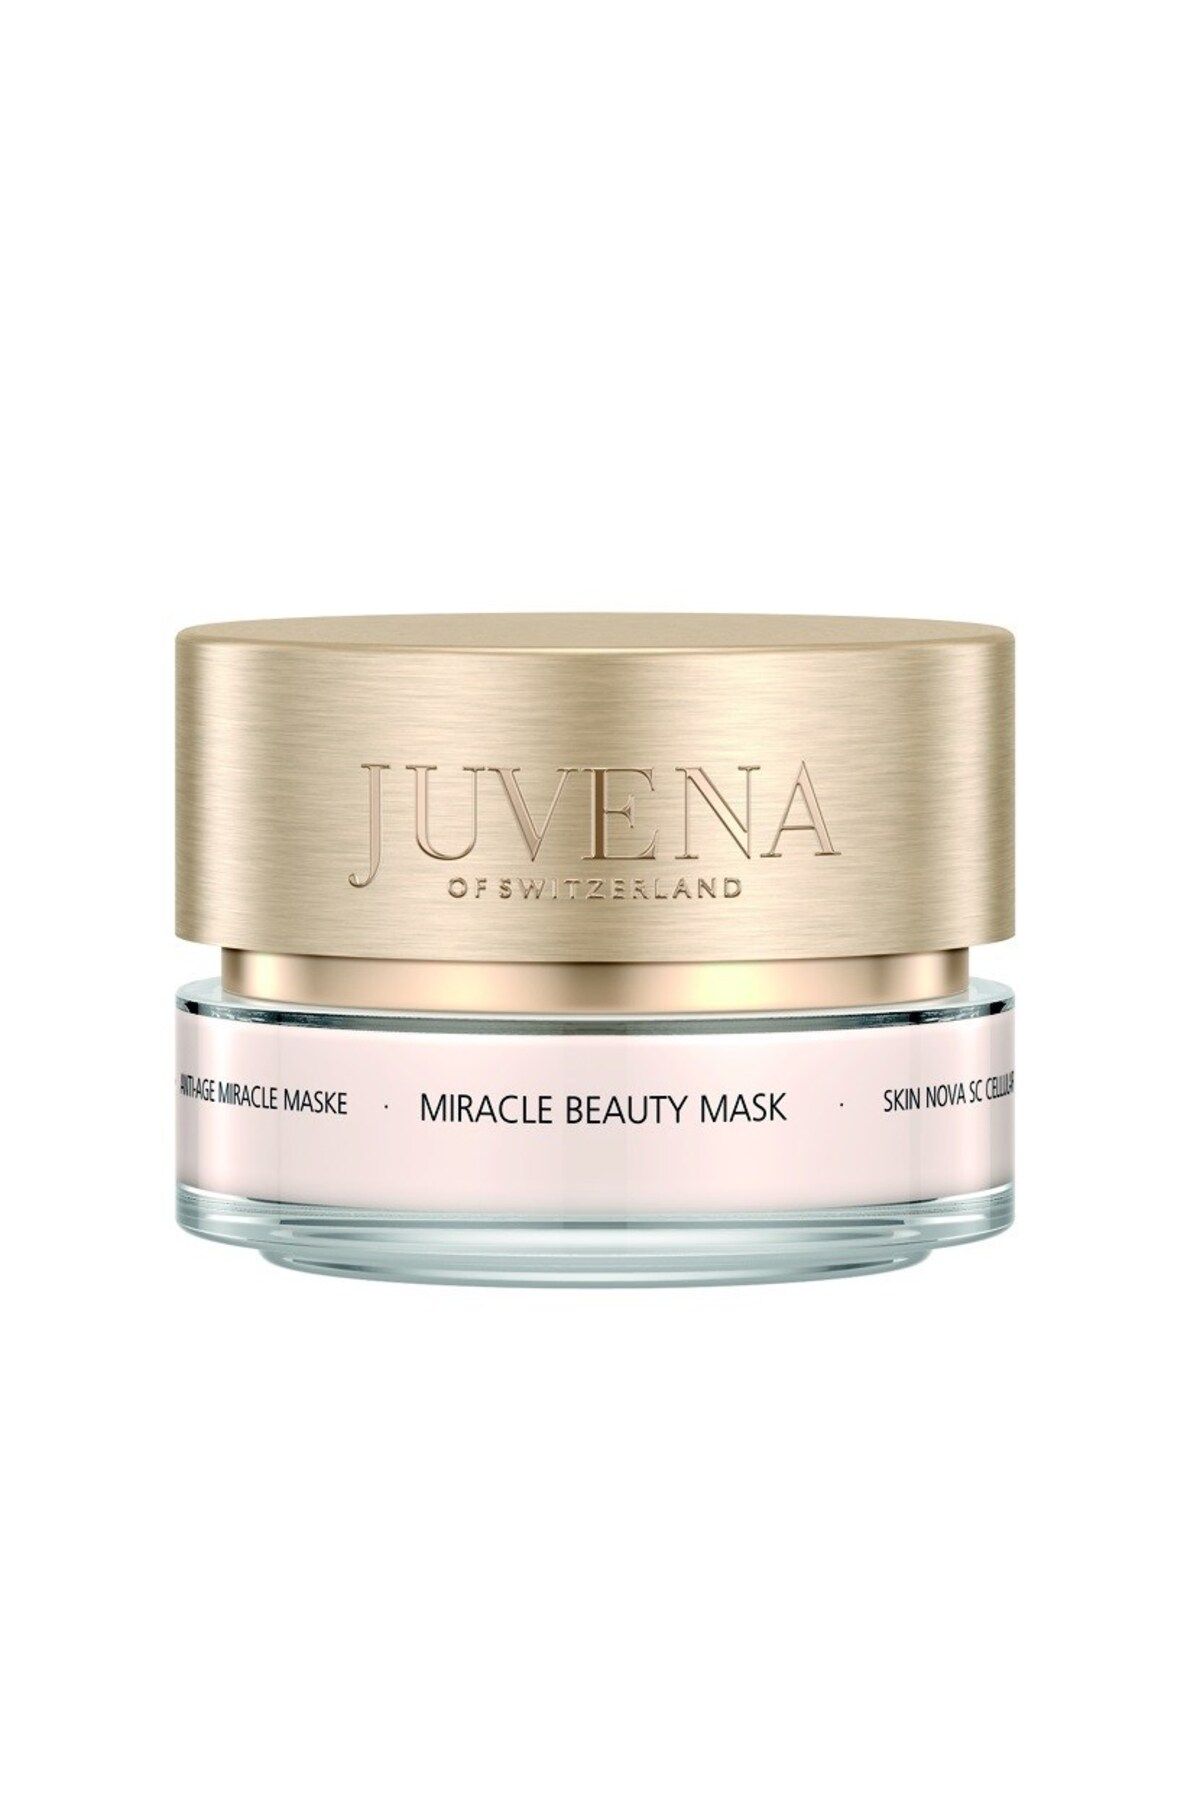 Juvena Miracle Beauty Mask 75ml